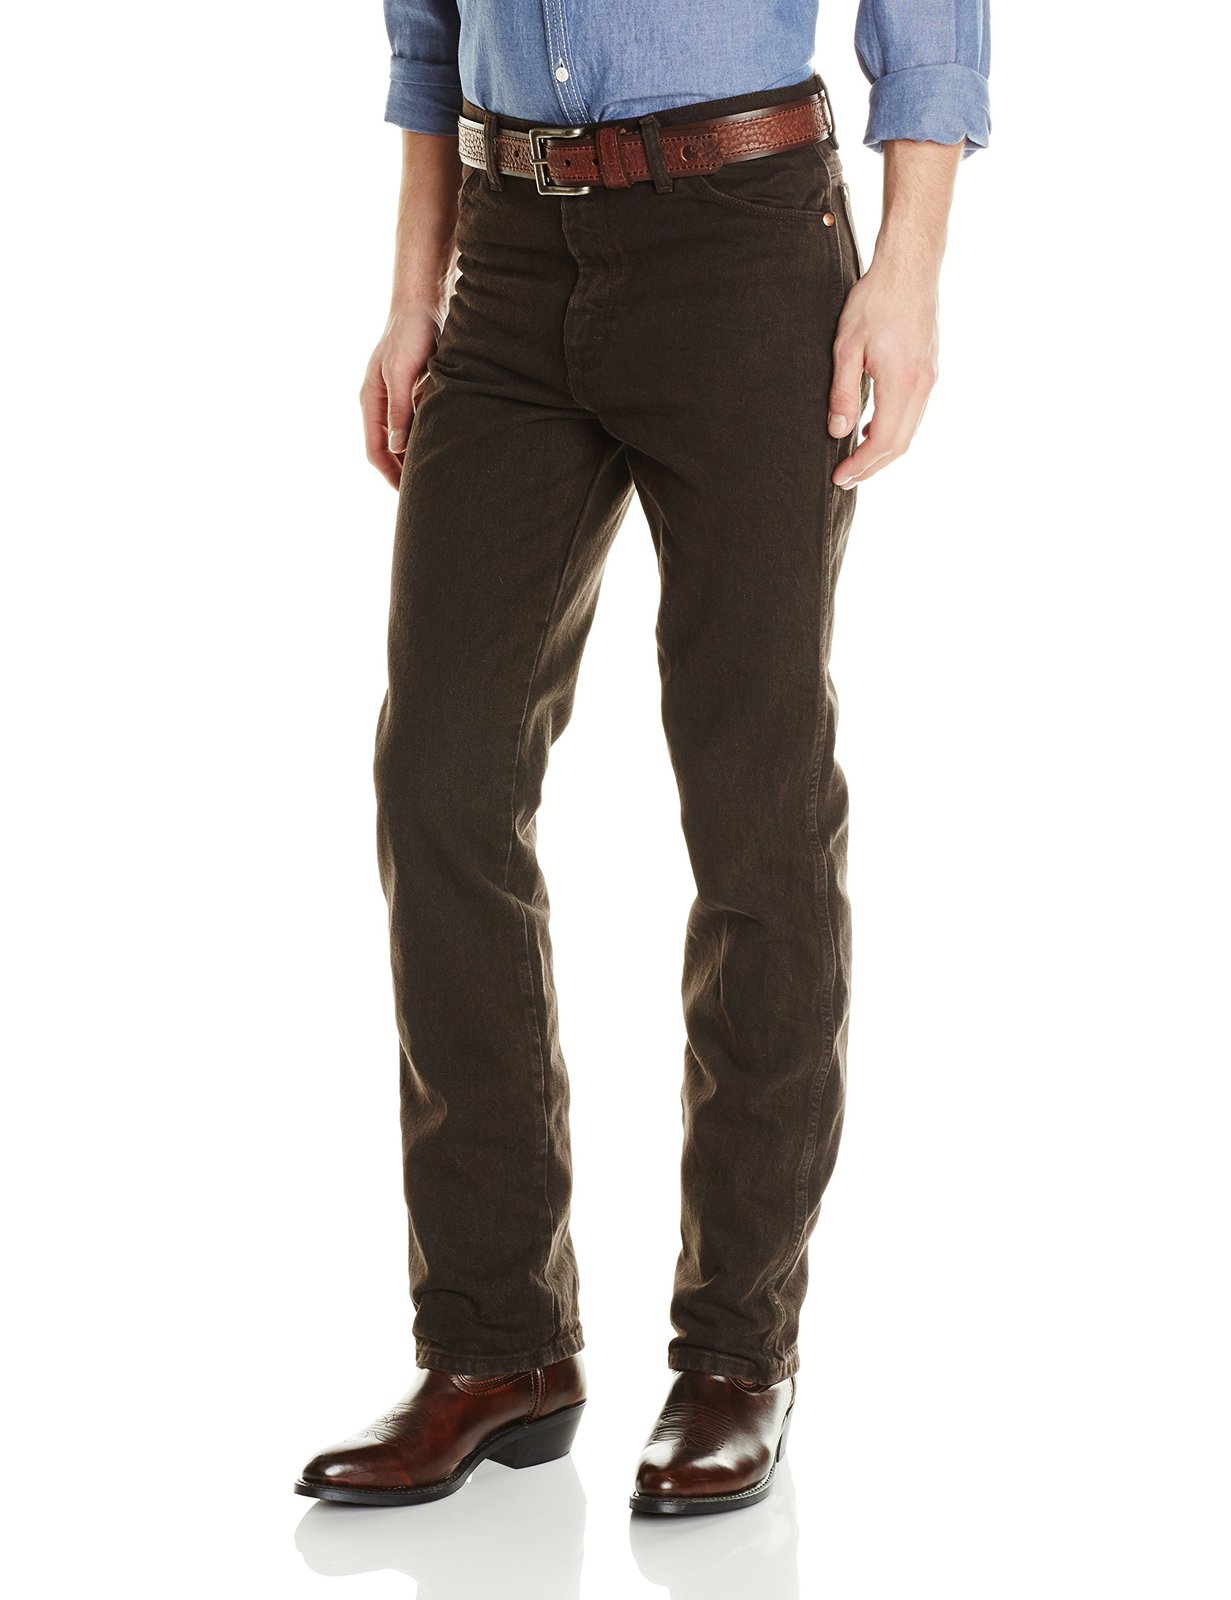 Wrangler Men's Cowboy Cut Slim Fit Jean, Black Chocolate, 29Wx34L - $39.95